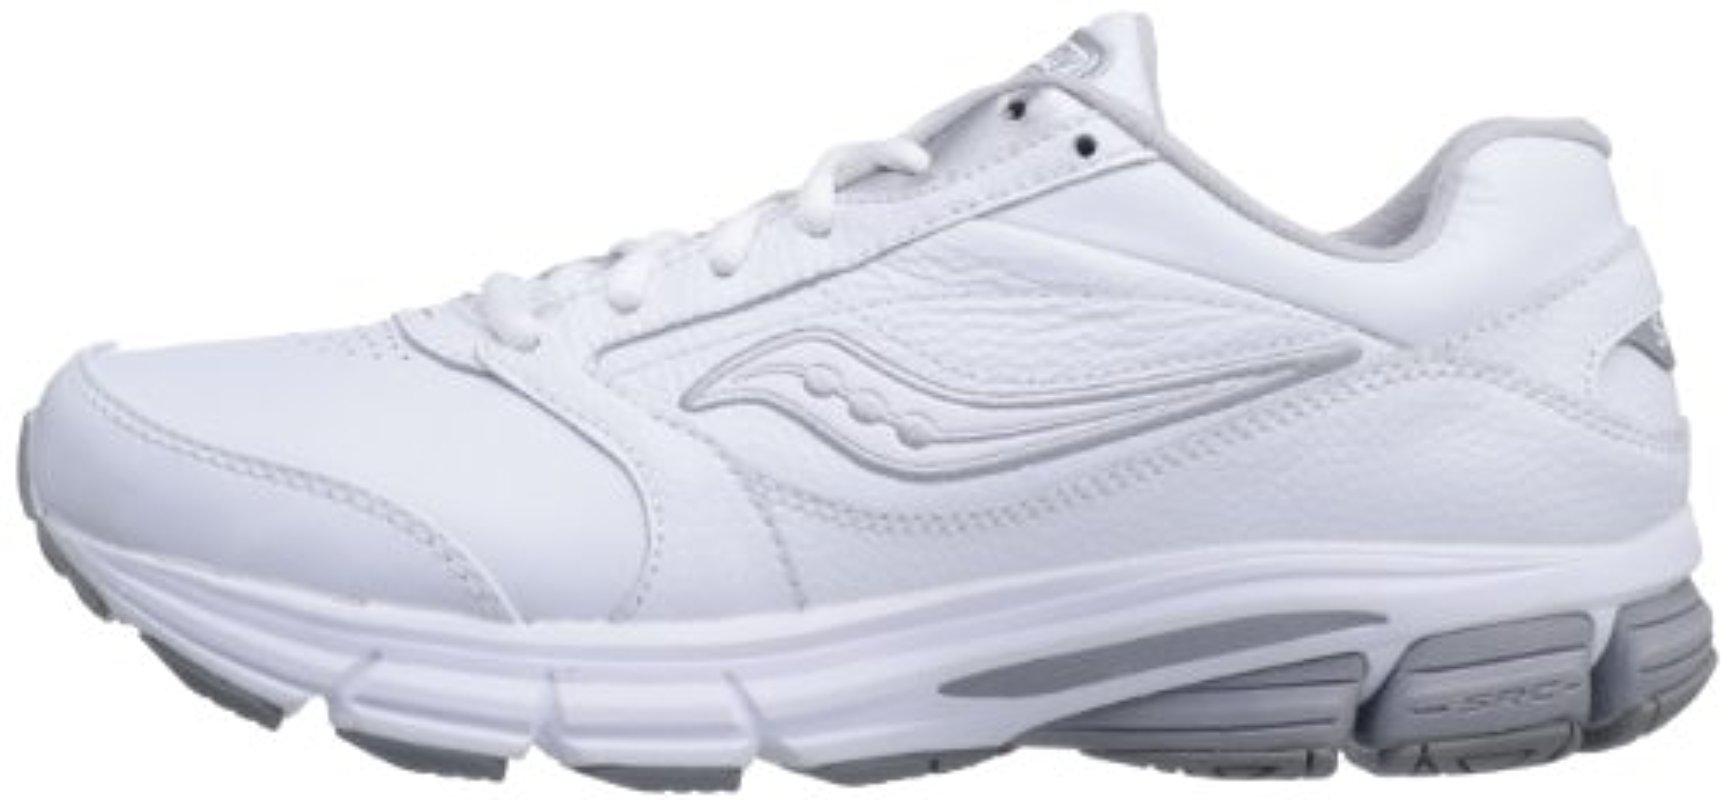 Saucony Rubber Echelon Le2 Walking Shoe in White/Silver (White) for Men -  Lyst